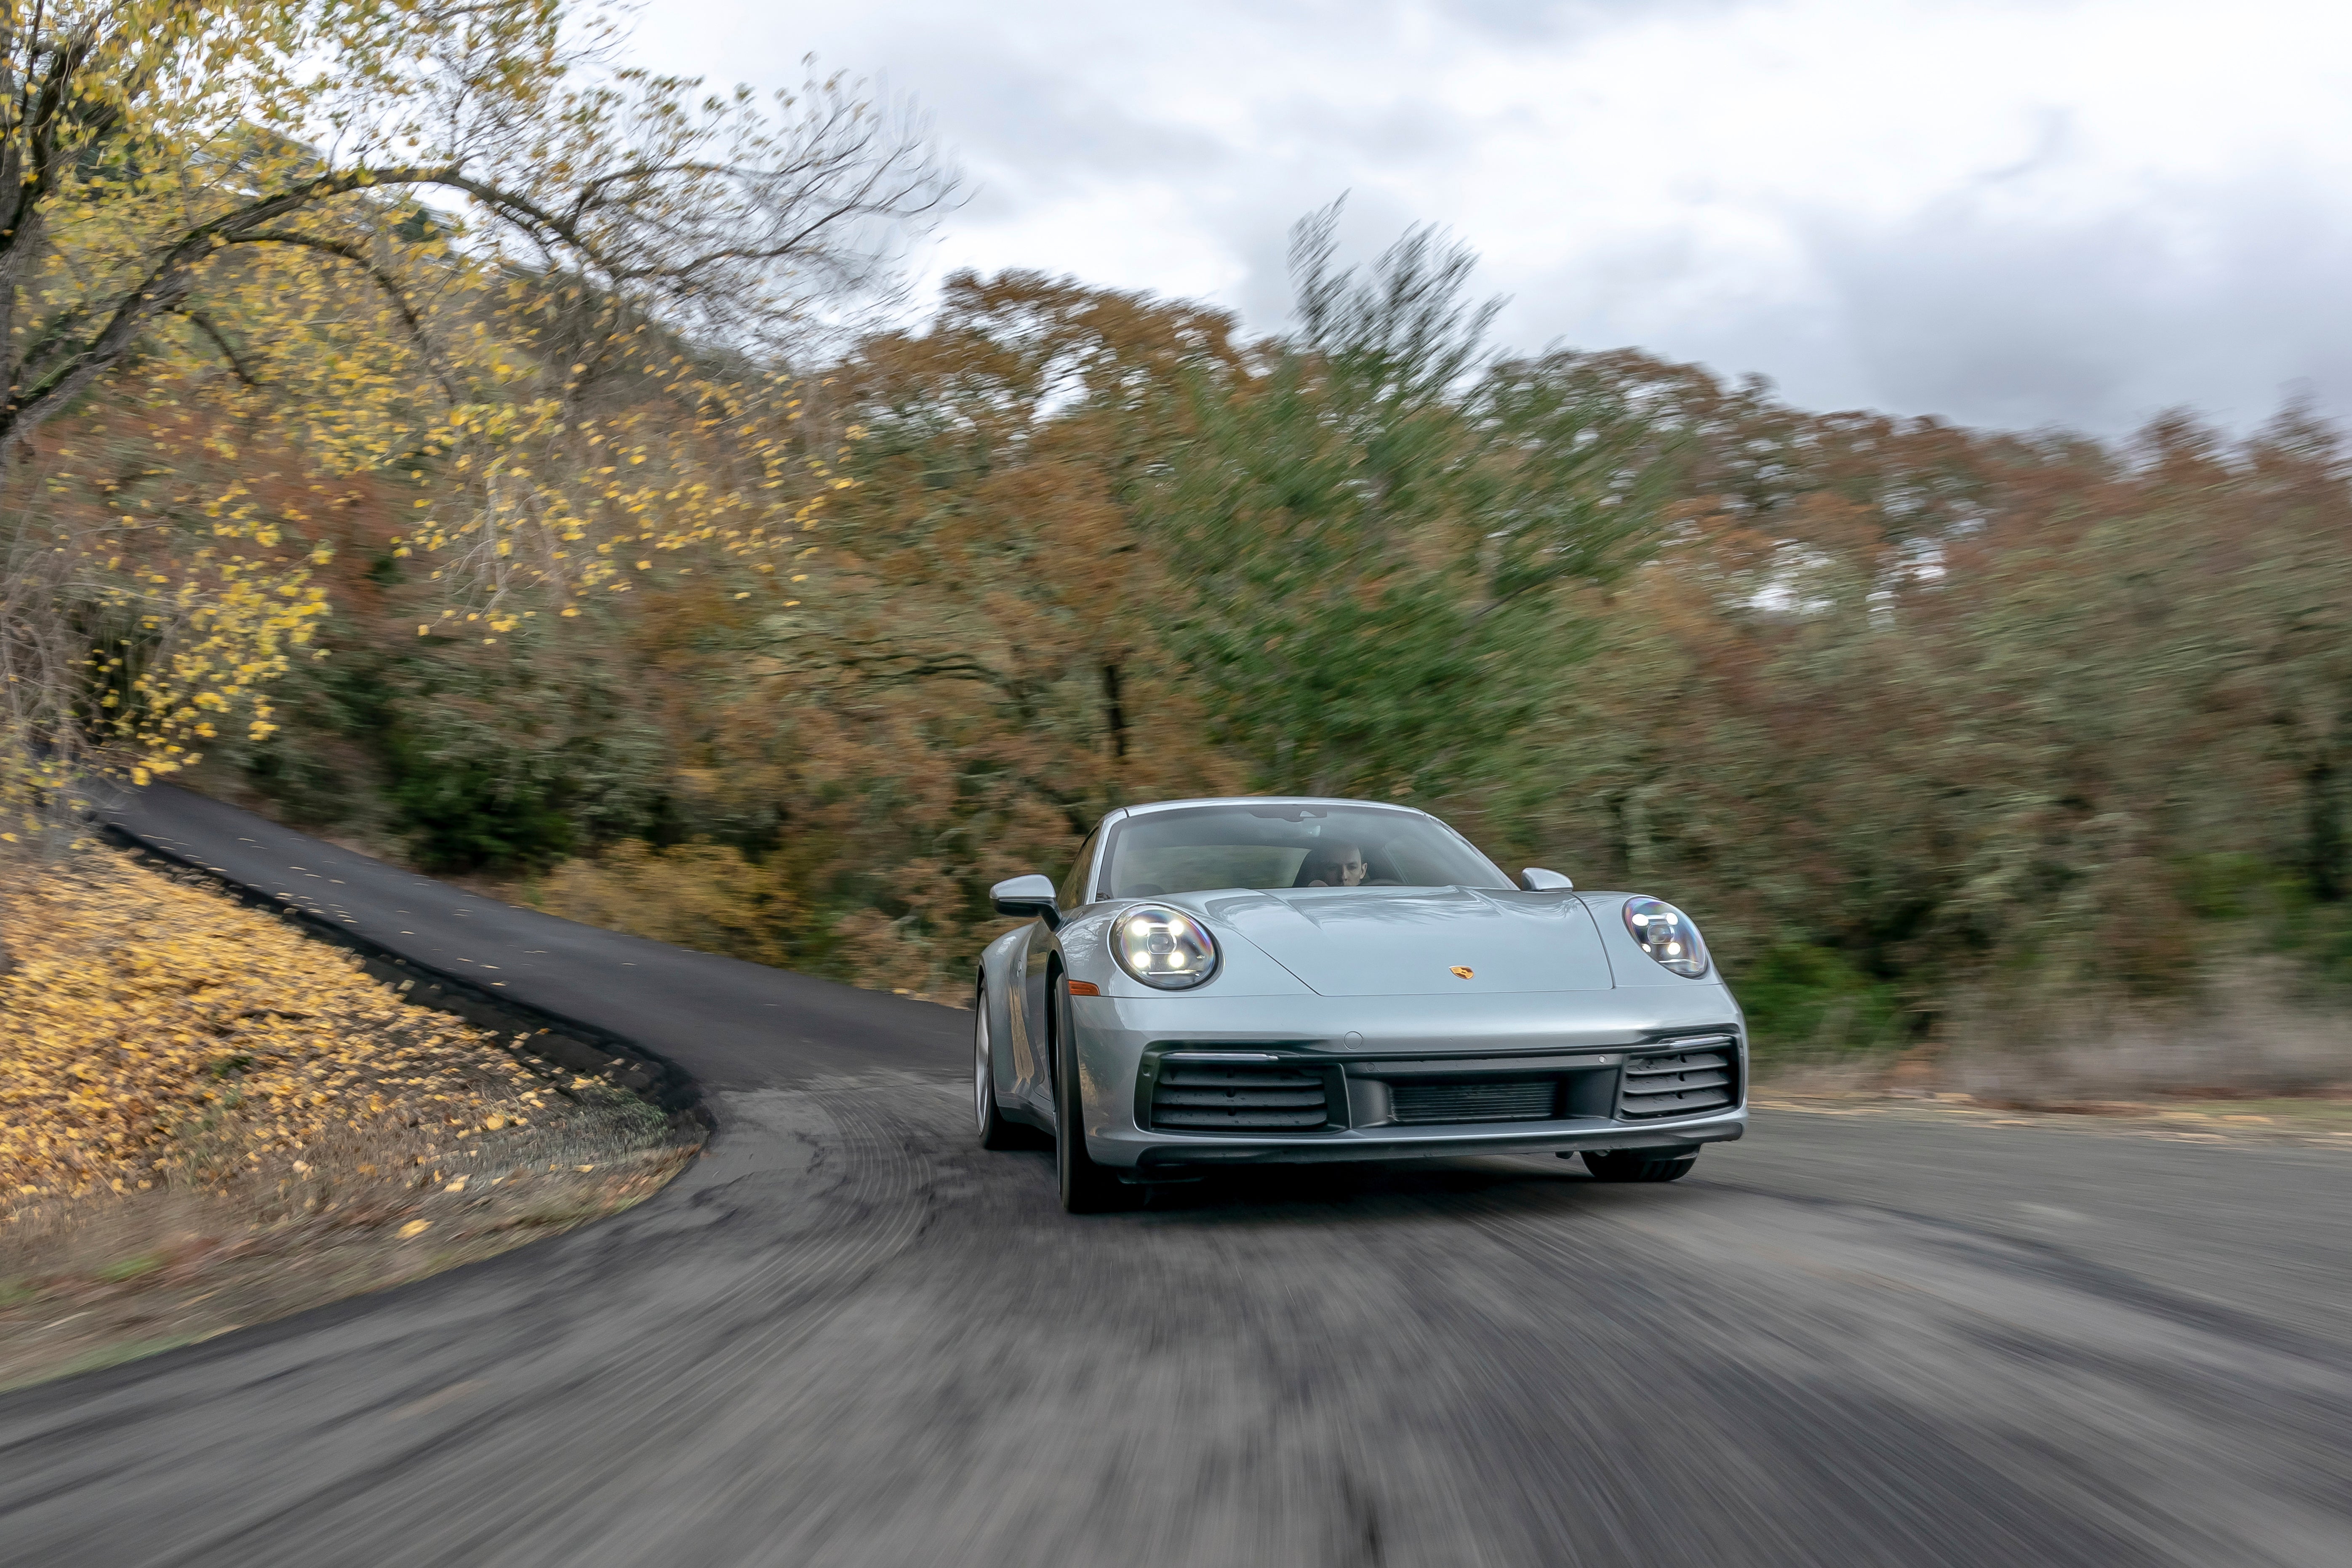 Behind The Wheel Porsche vs Corvette